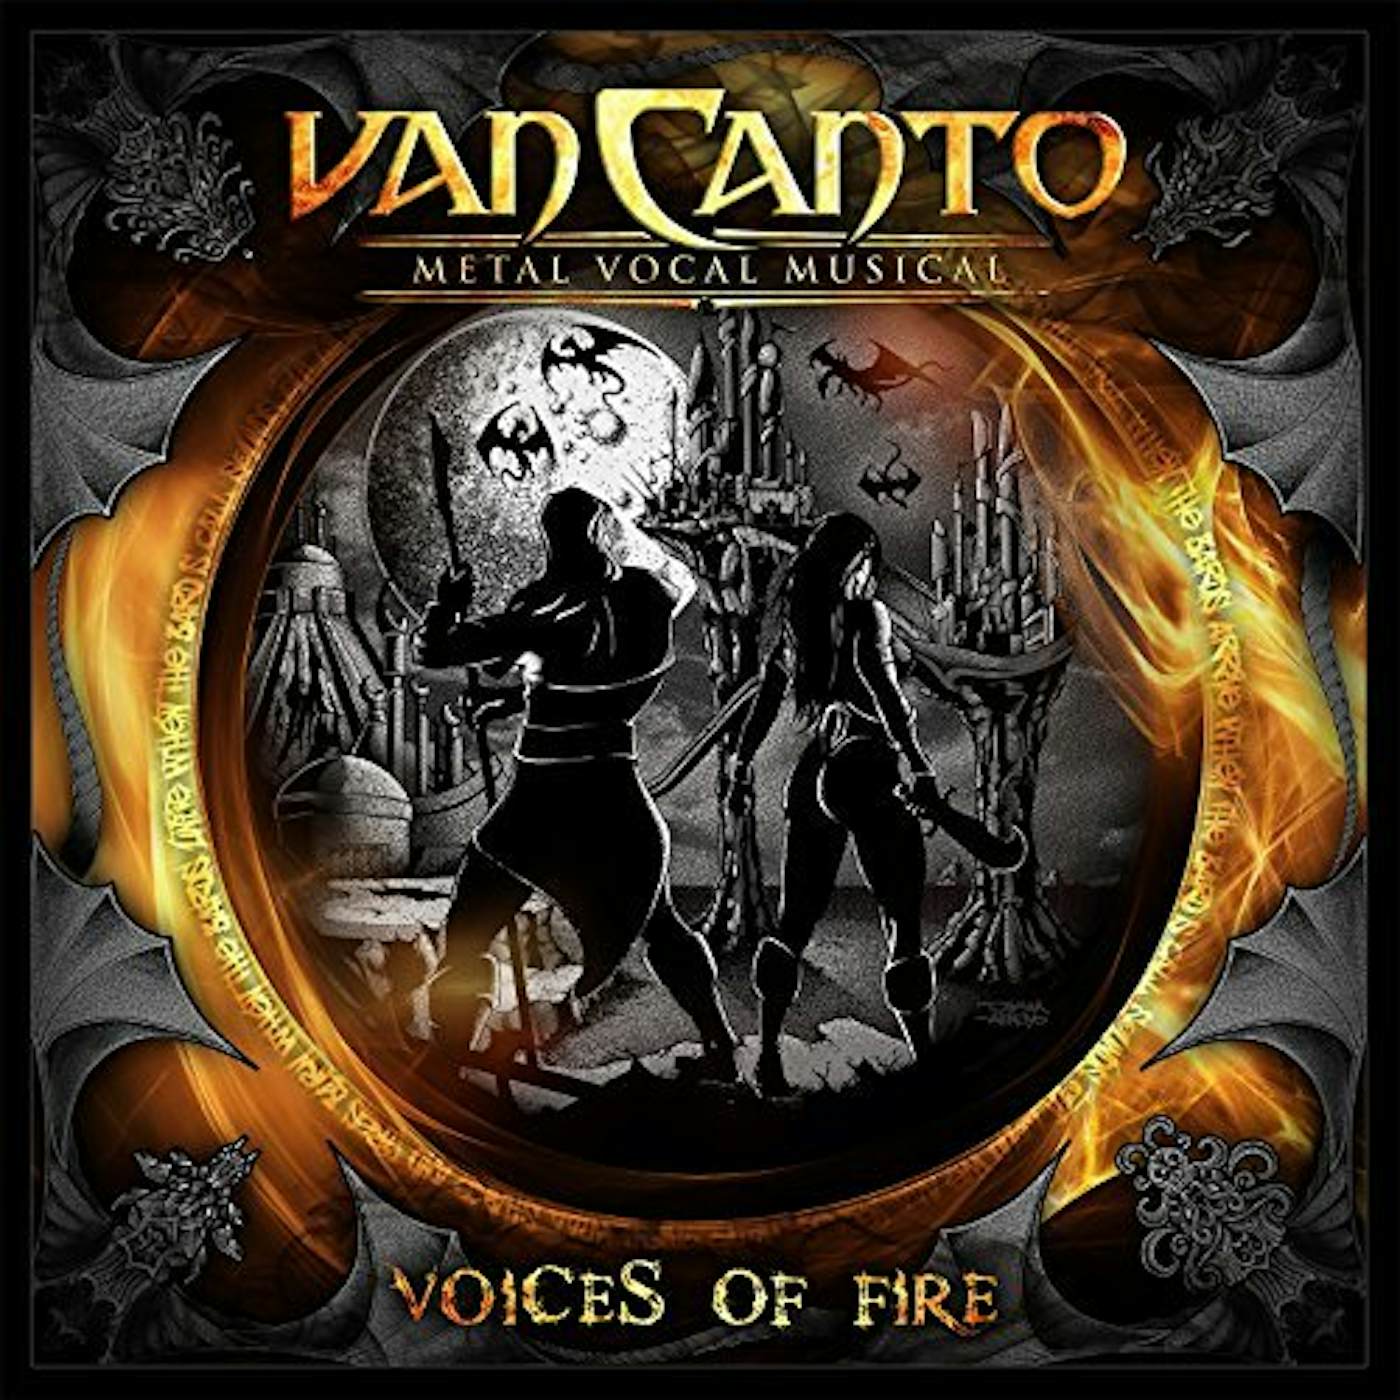 Van Canto Voices of Fire Vinyl Record